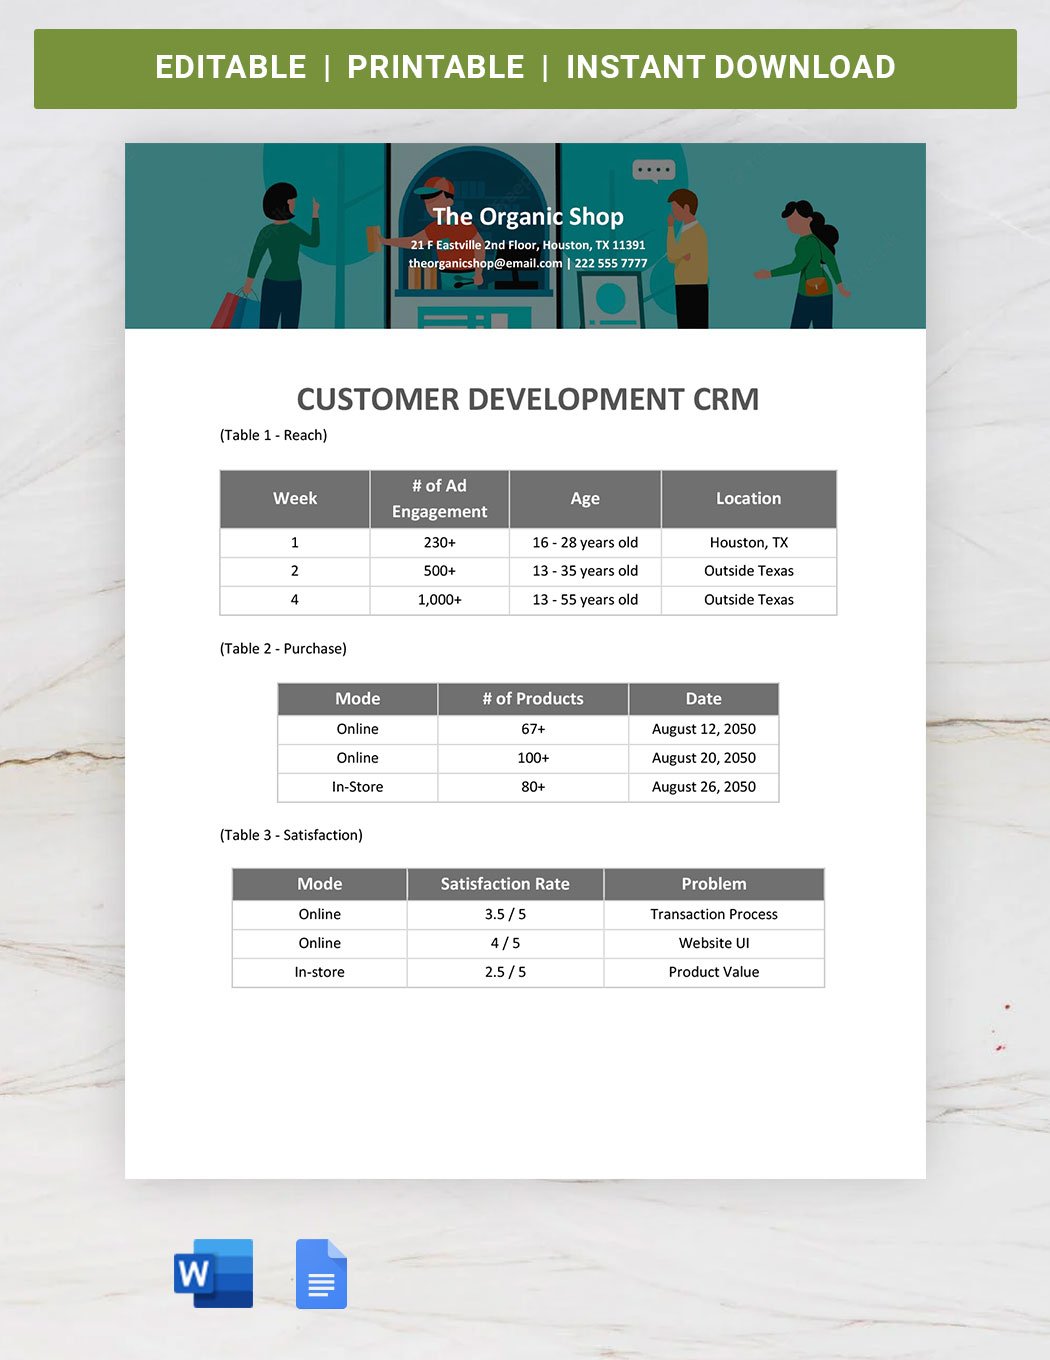 Customer Development CRM Template in Word, Google Docs